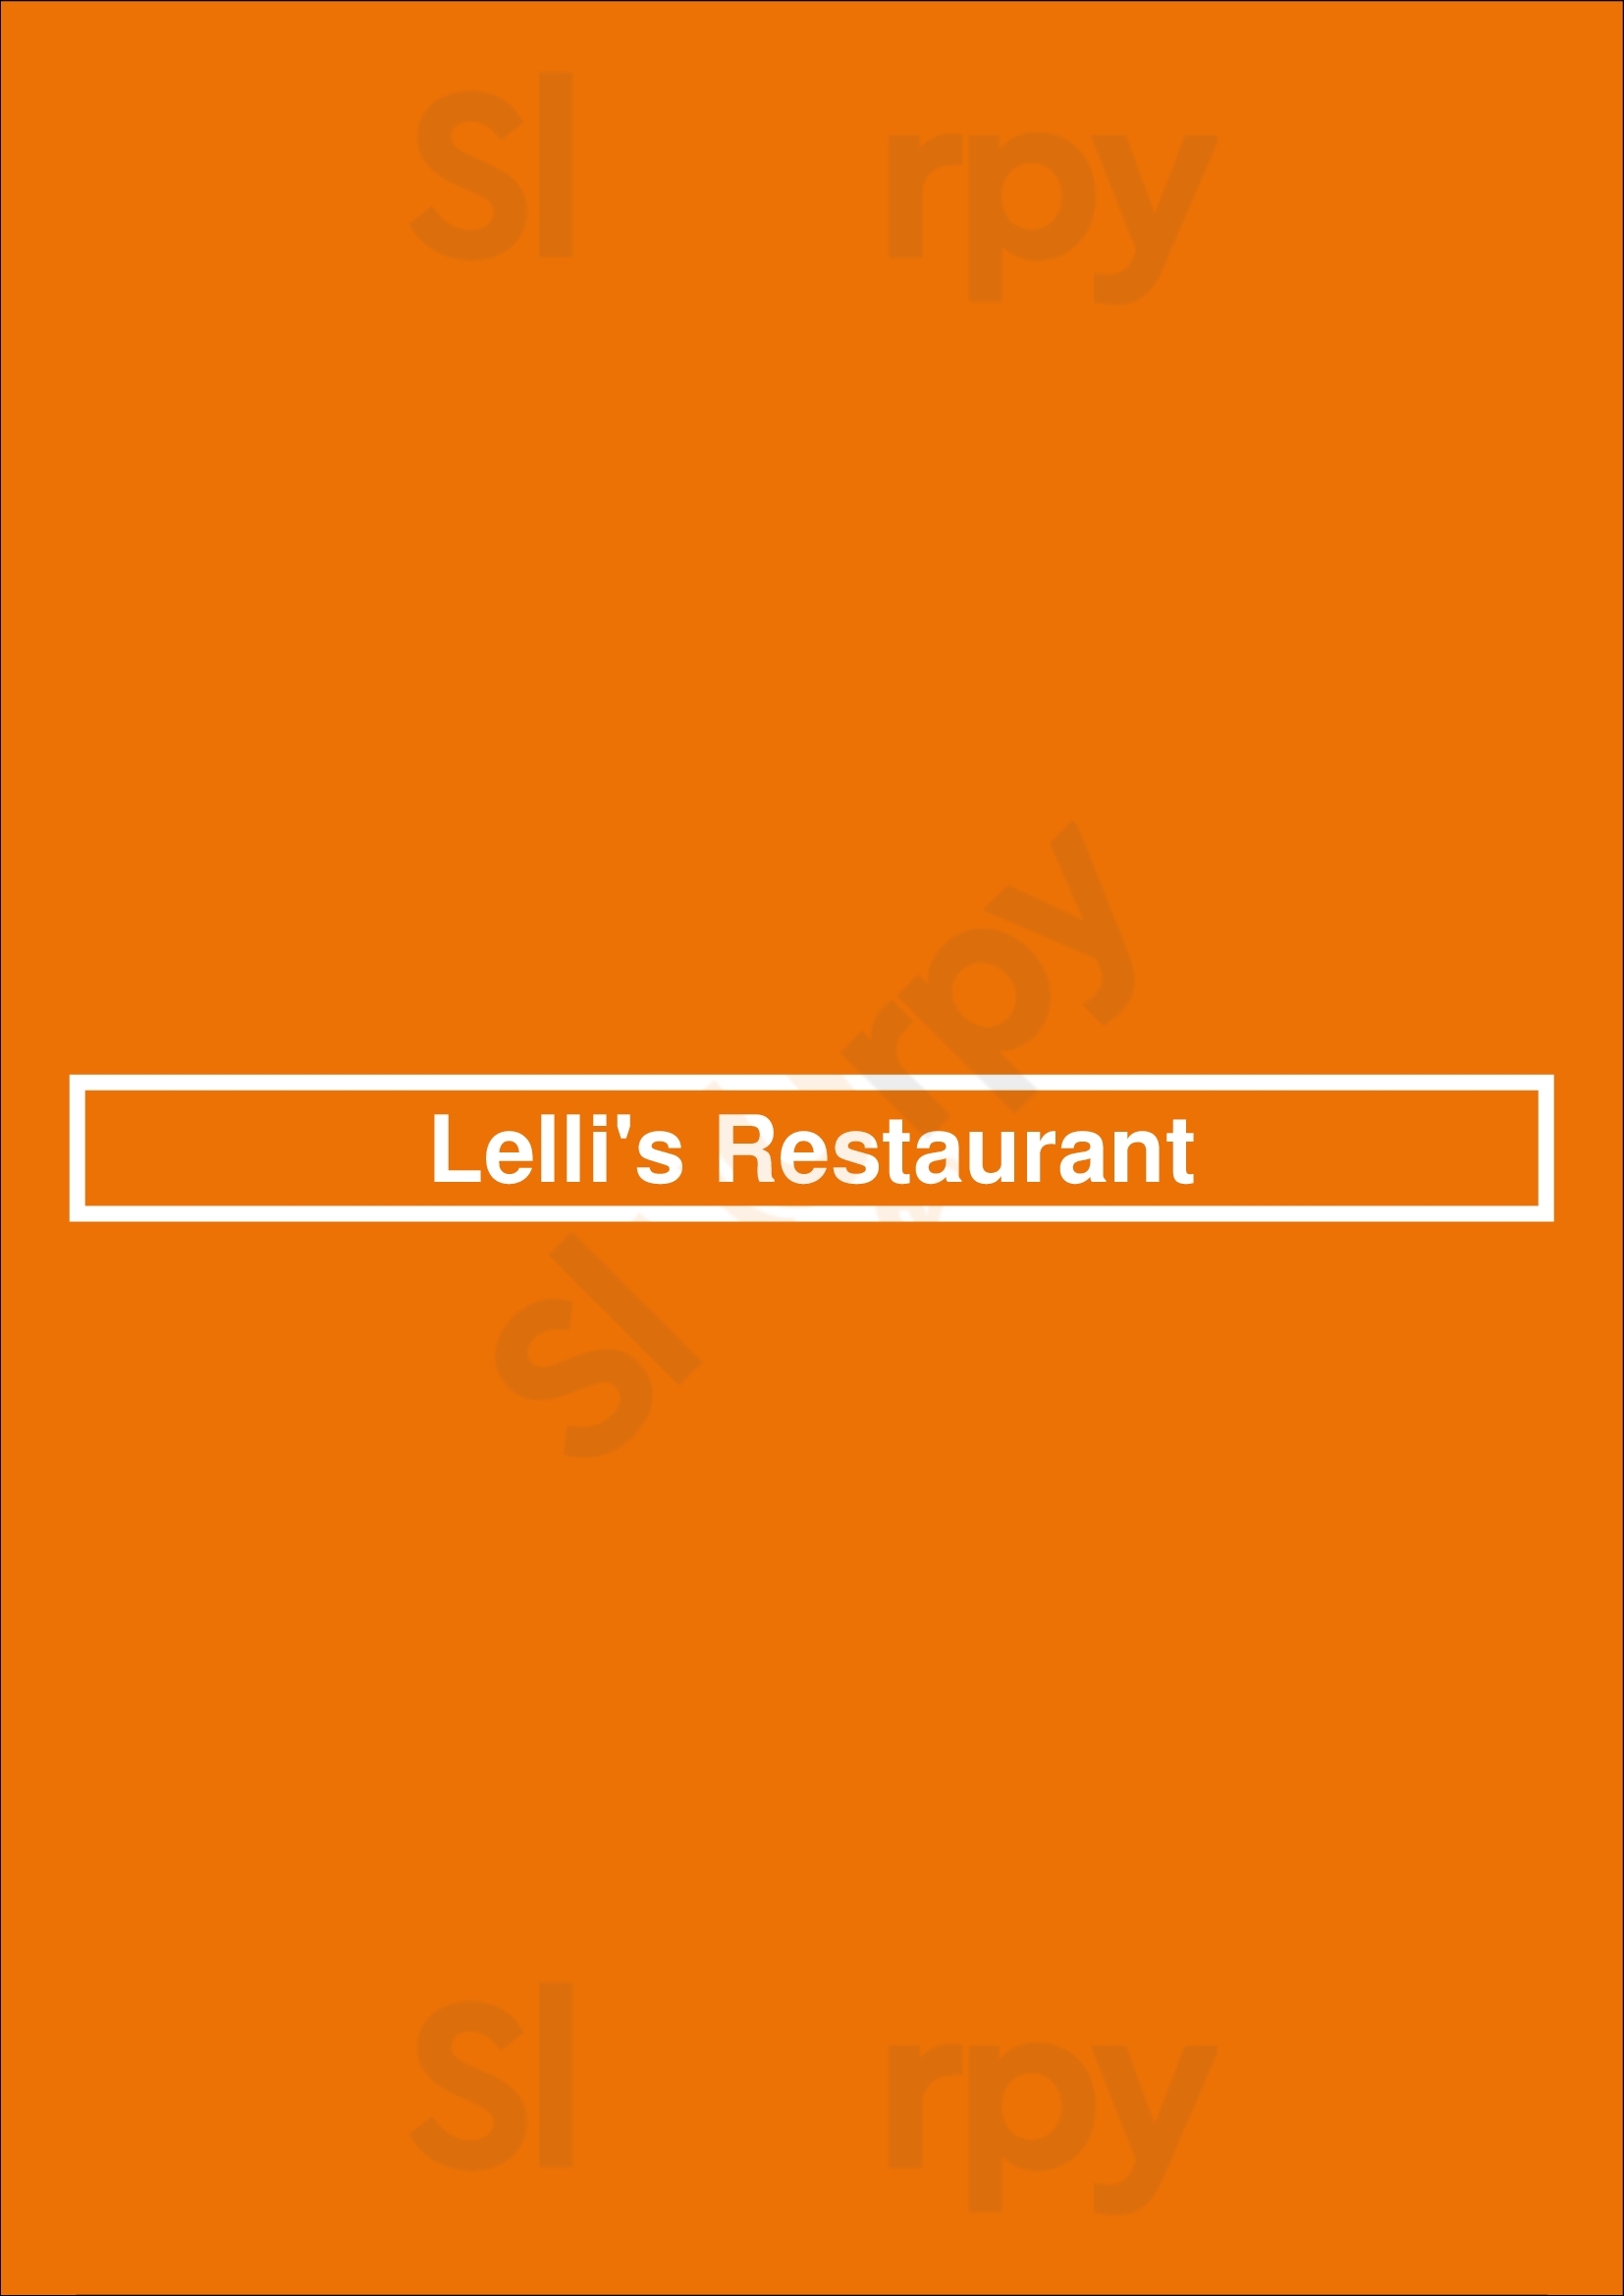 Lelli's Restaurant Auburn Hills Menu - 1